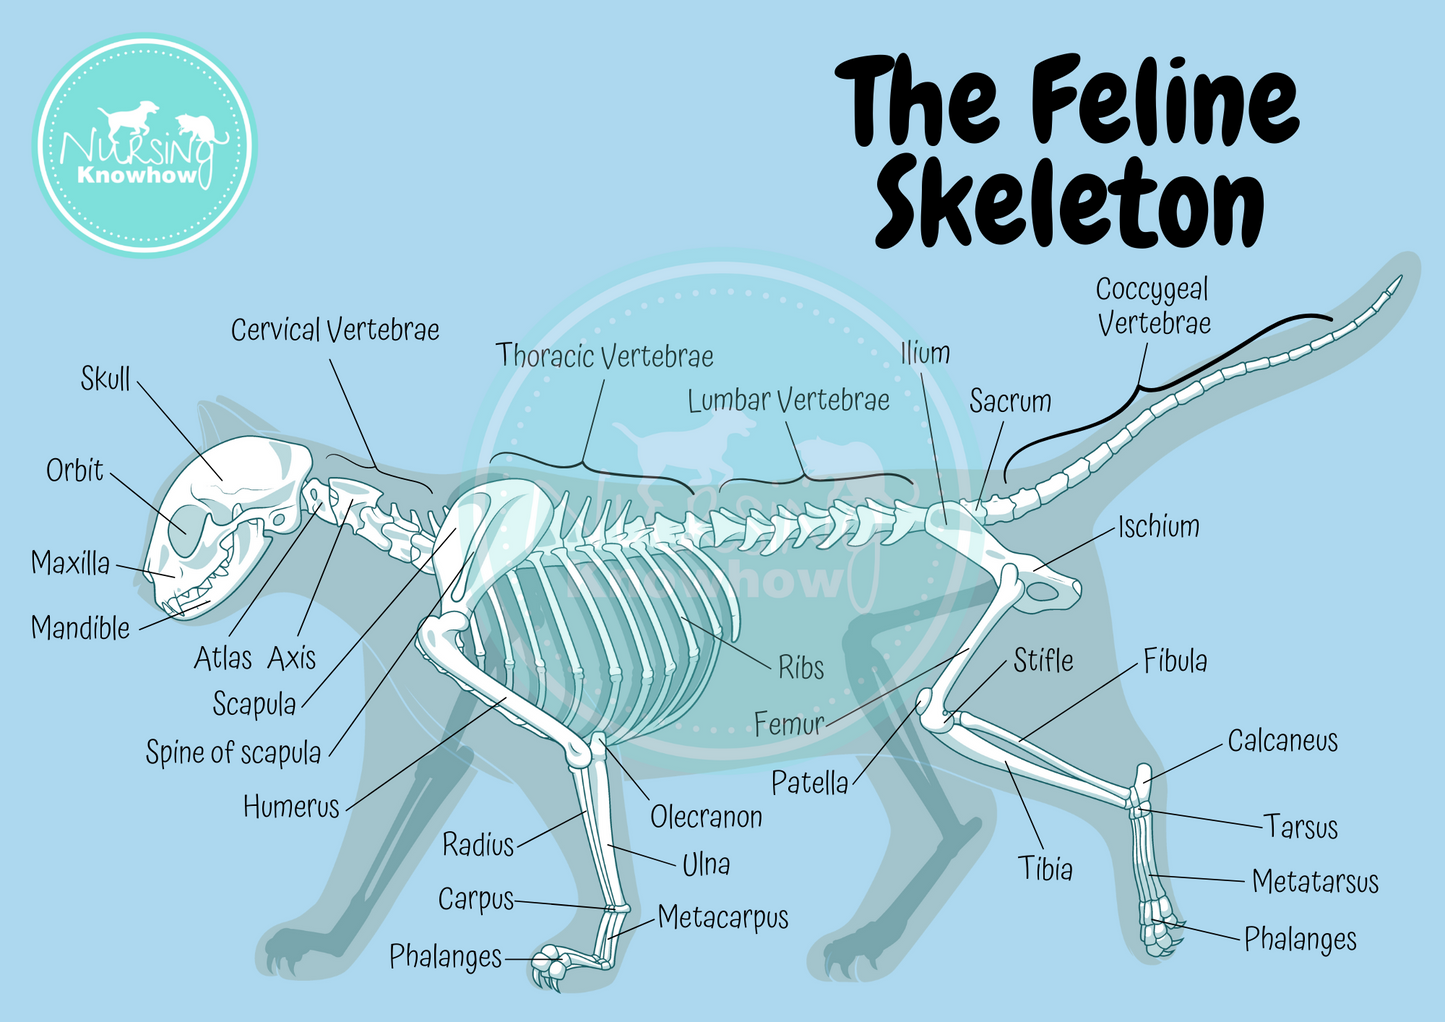 The Feline Skeleton (Digital Download) - Nursing Knowhow